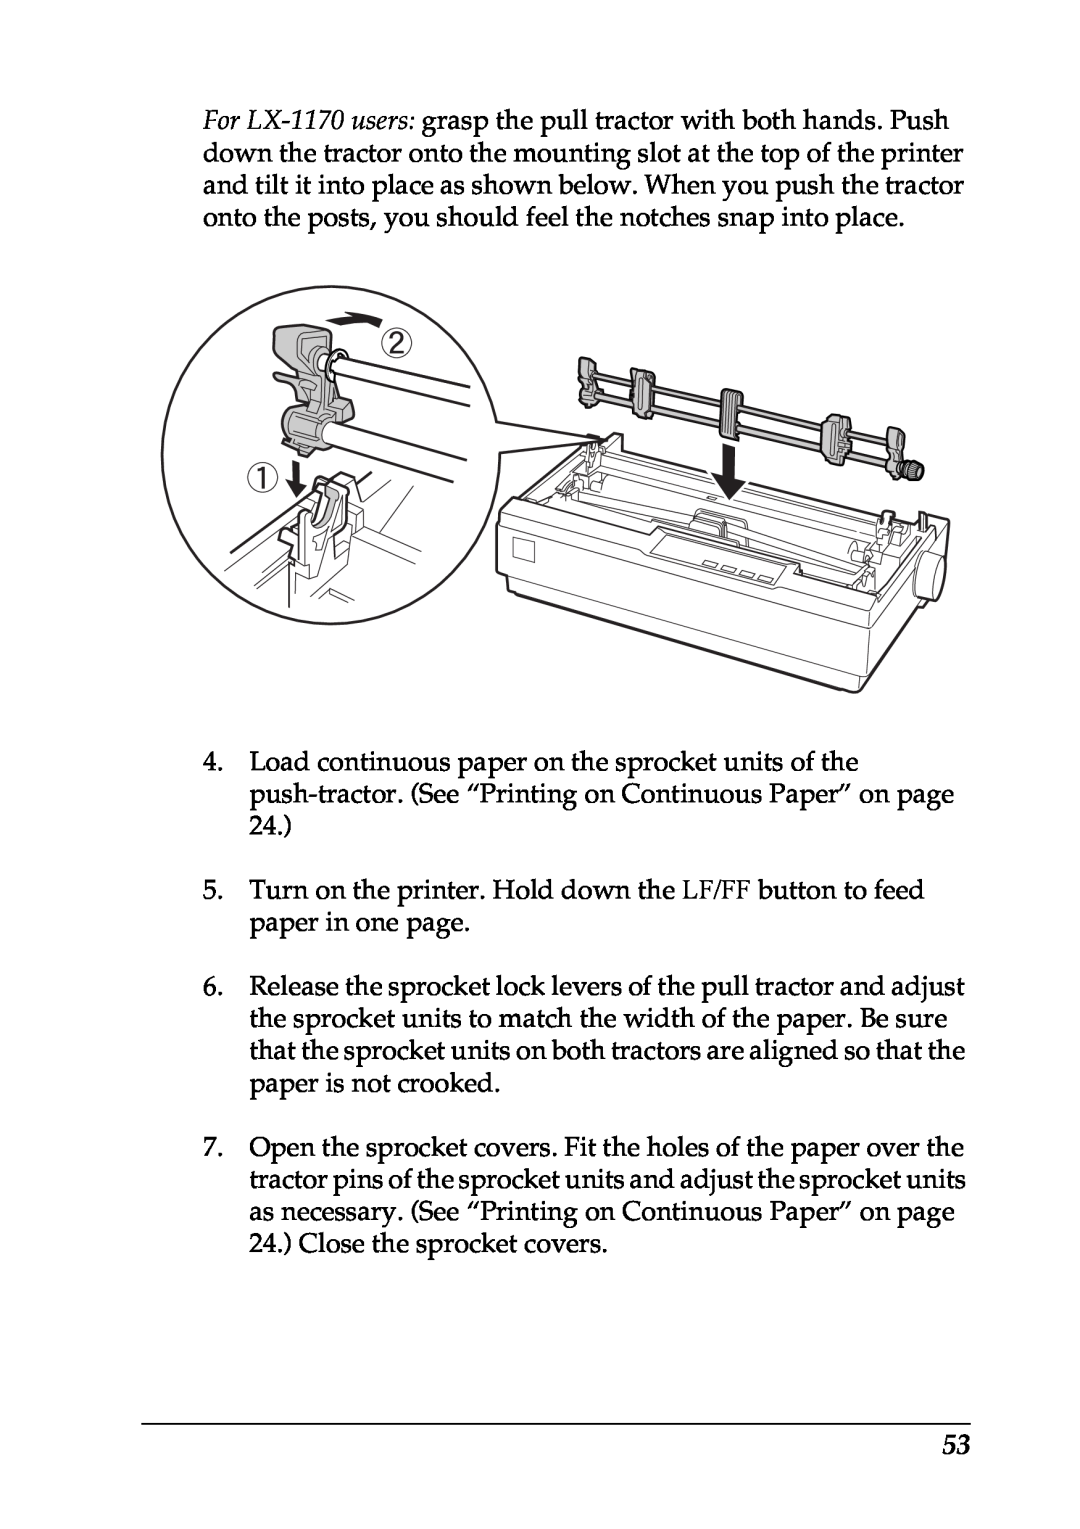 Epson LX-1170 manual 